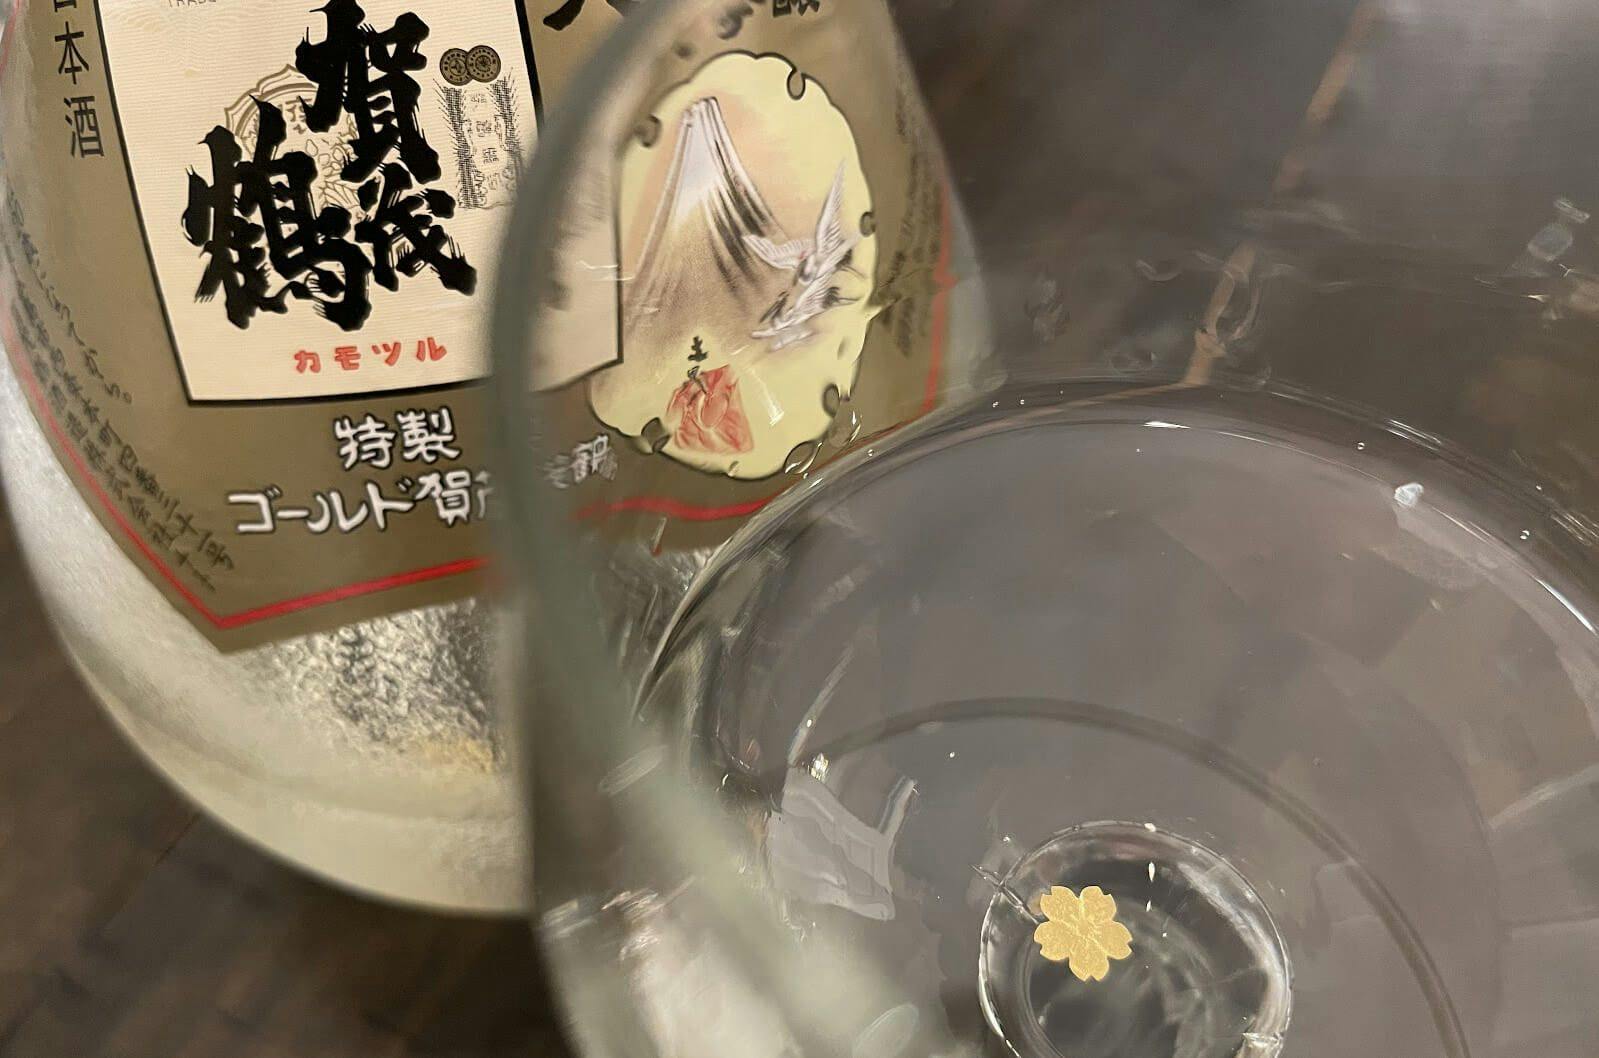 The delicate golden sakura flakes in the glass